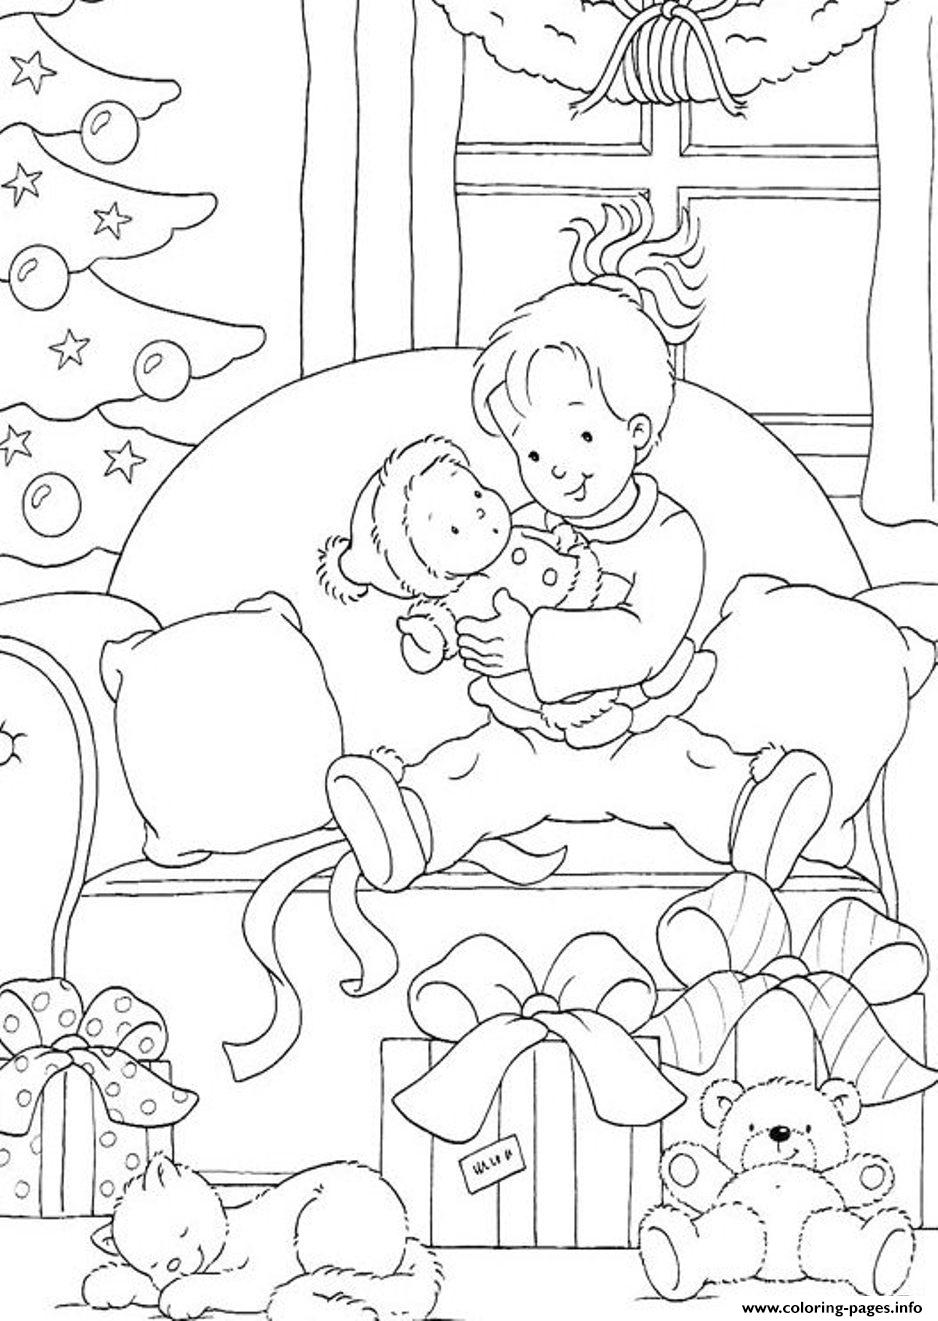 Printable S Christmas Kid And Her Presentsc9ad coloring